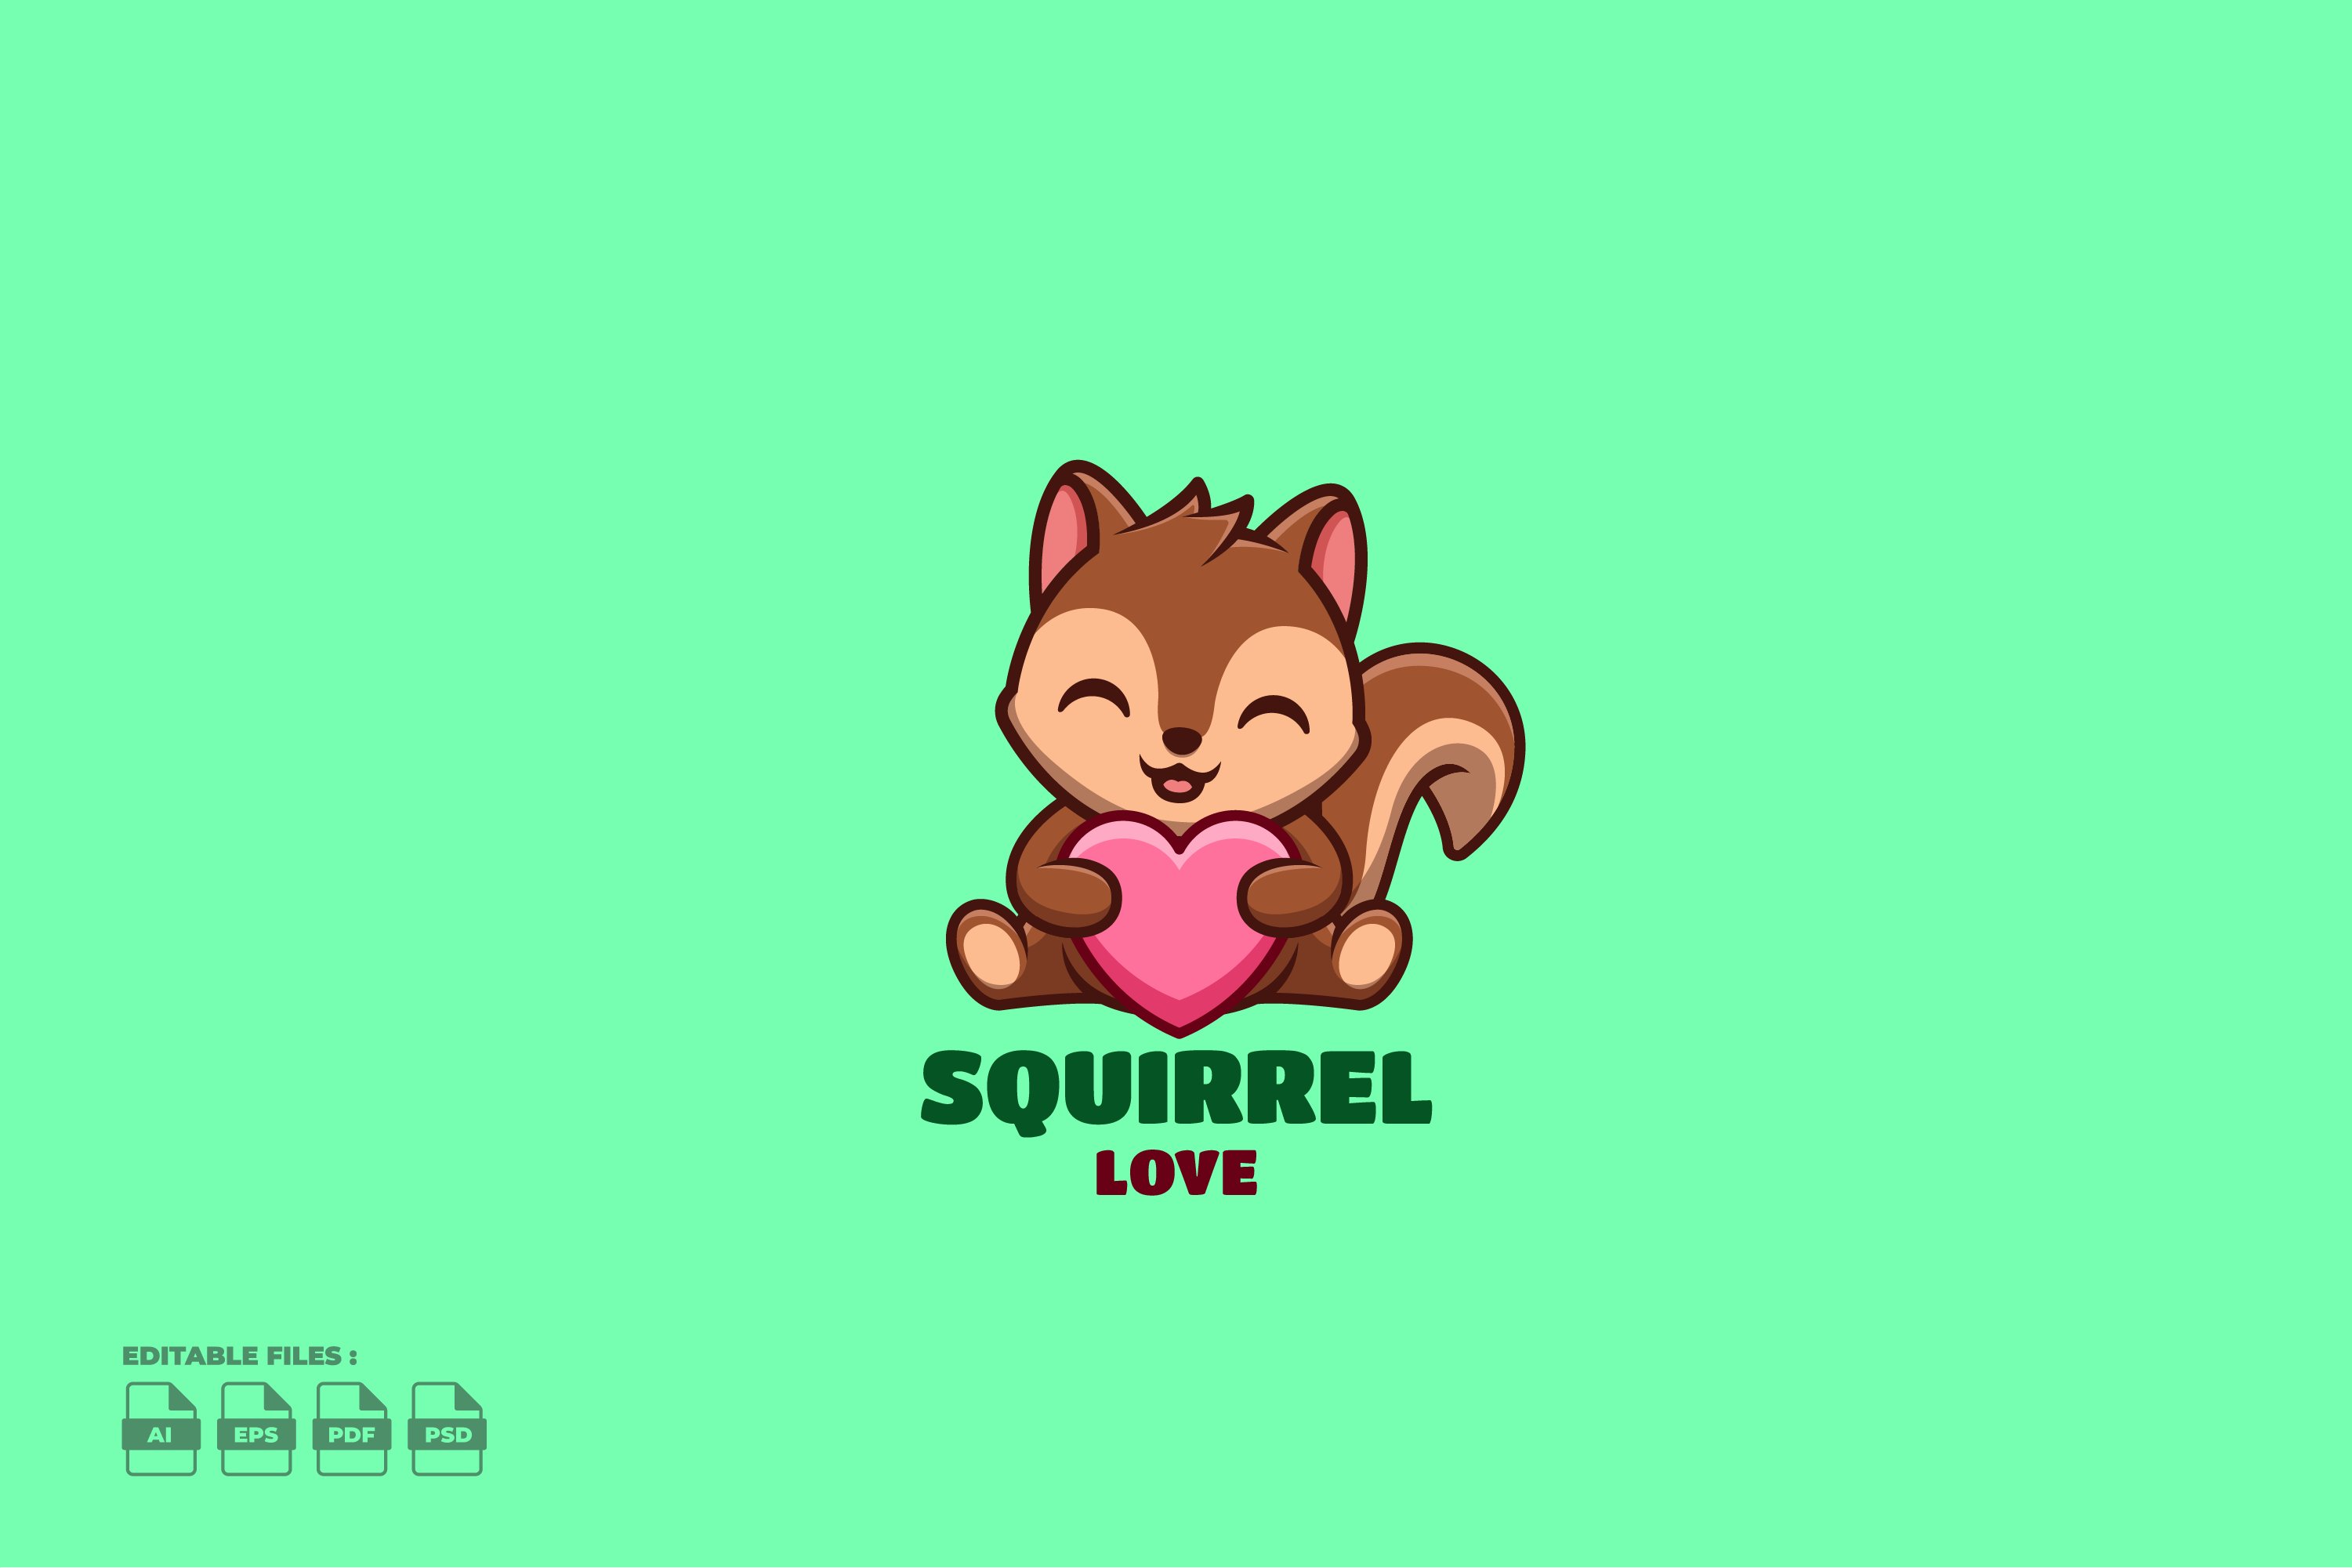 Love Squirrel Cute Mascot Logo cover image.